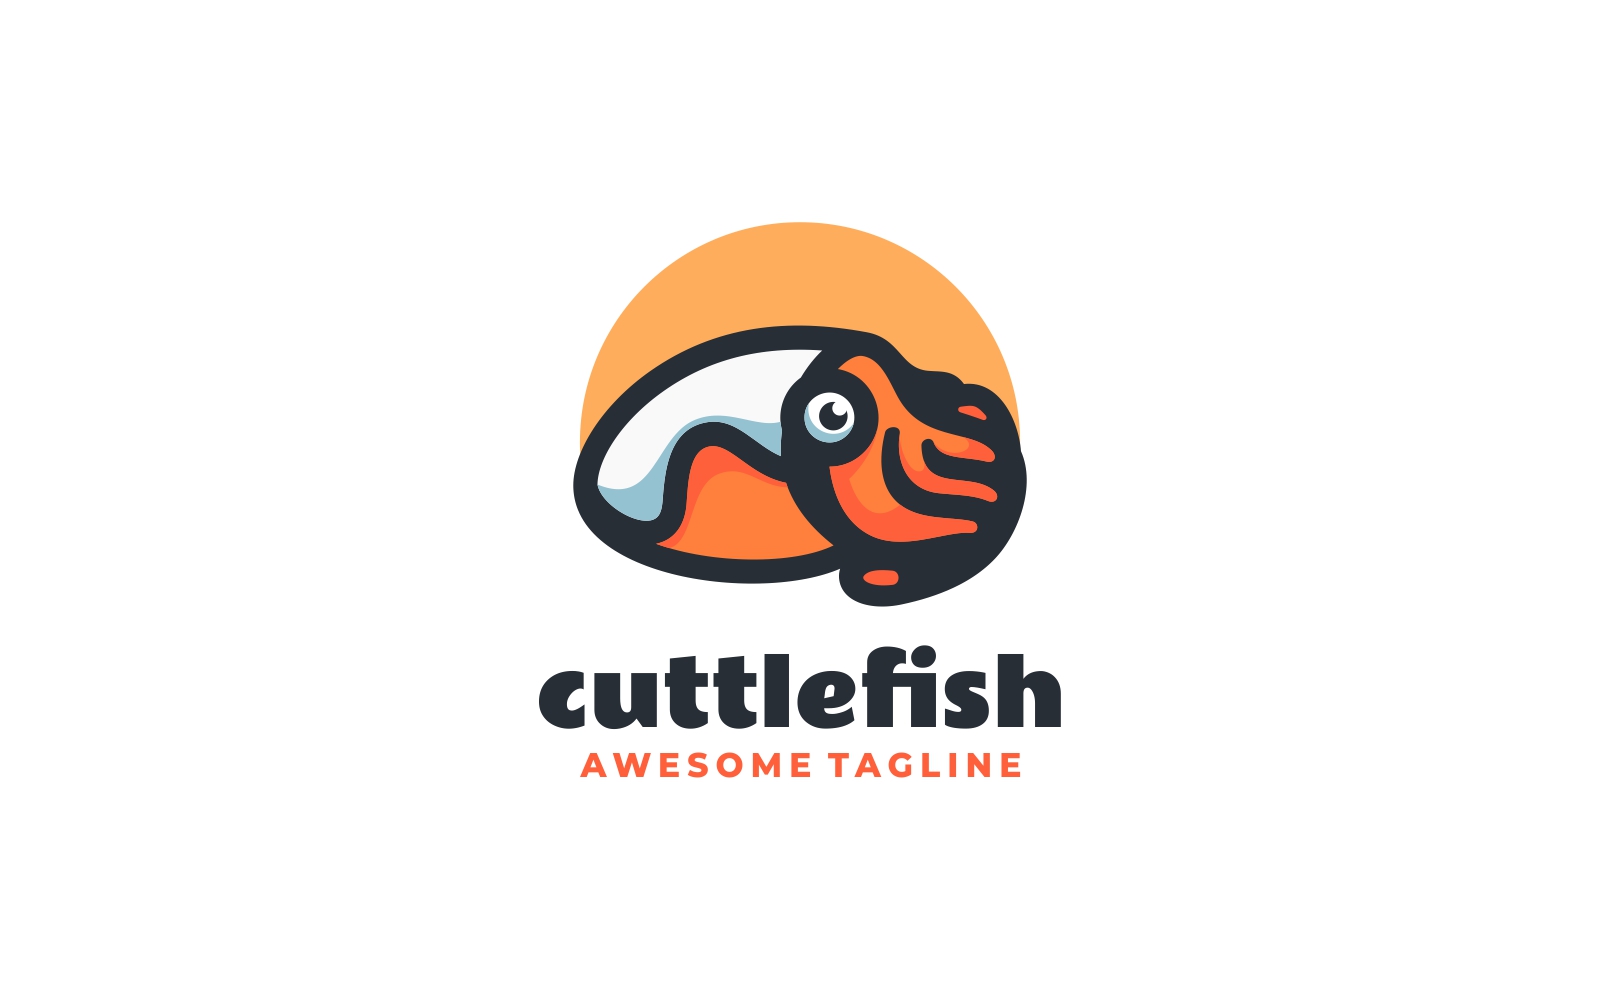 Cuttlefish Simple Mascot Logo